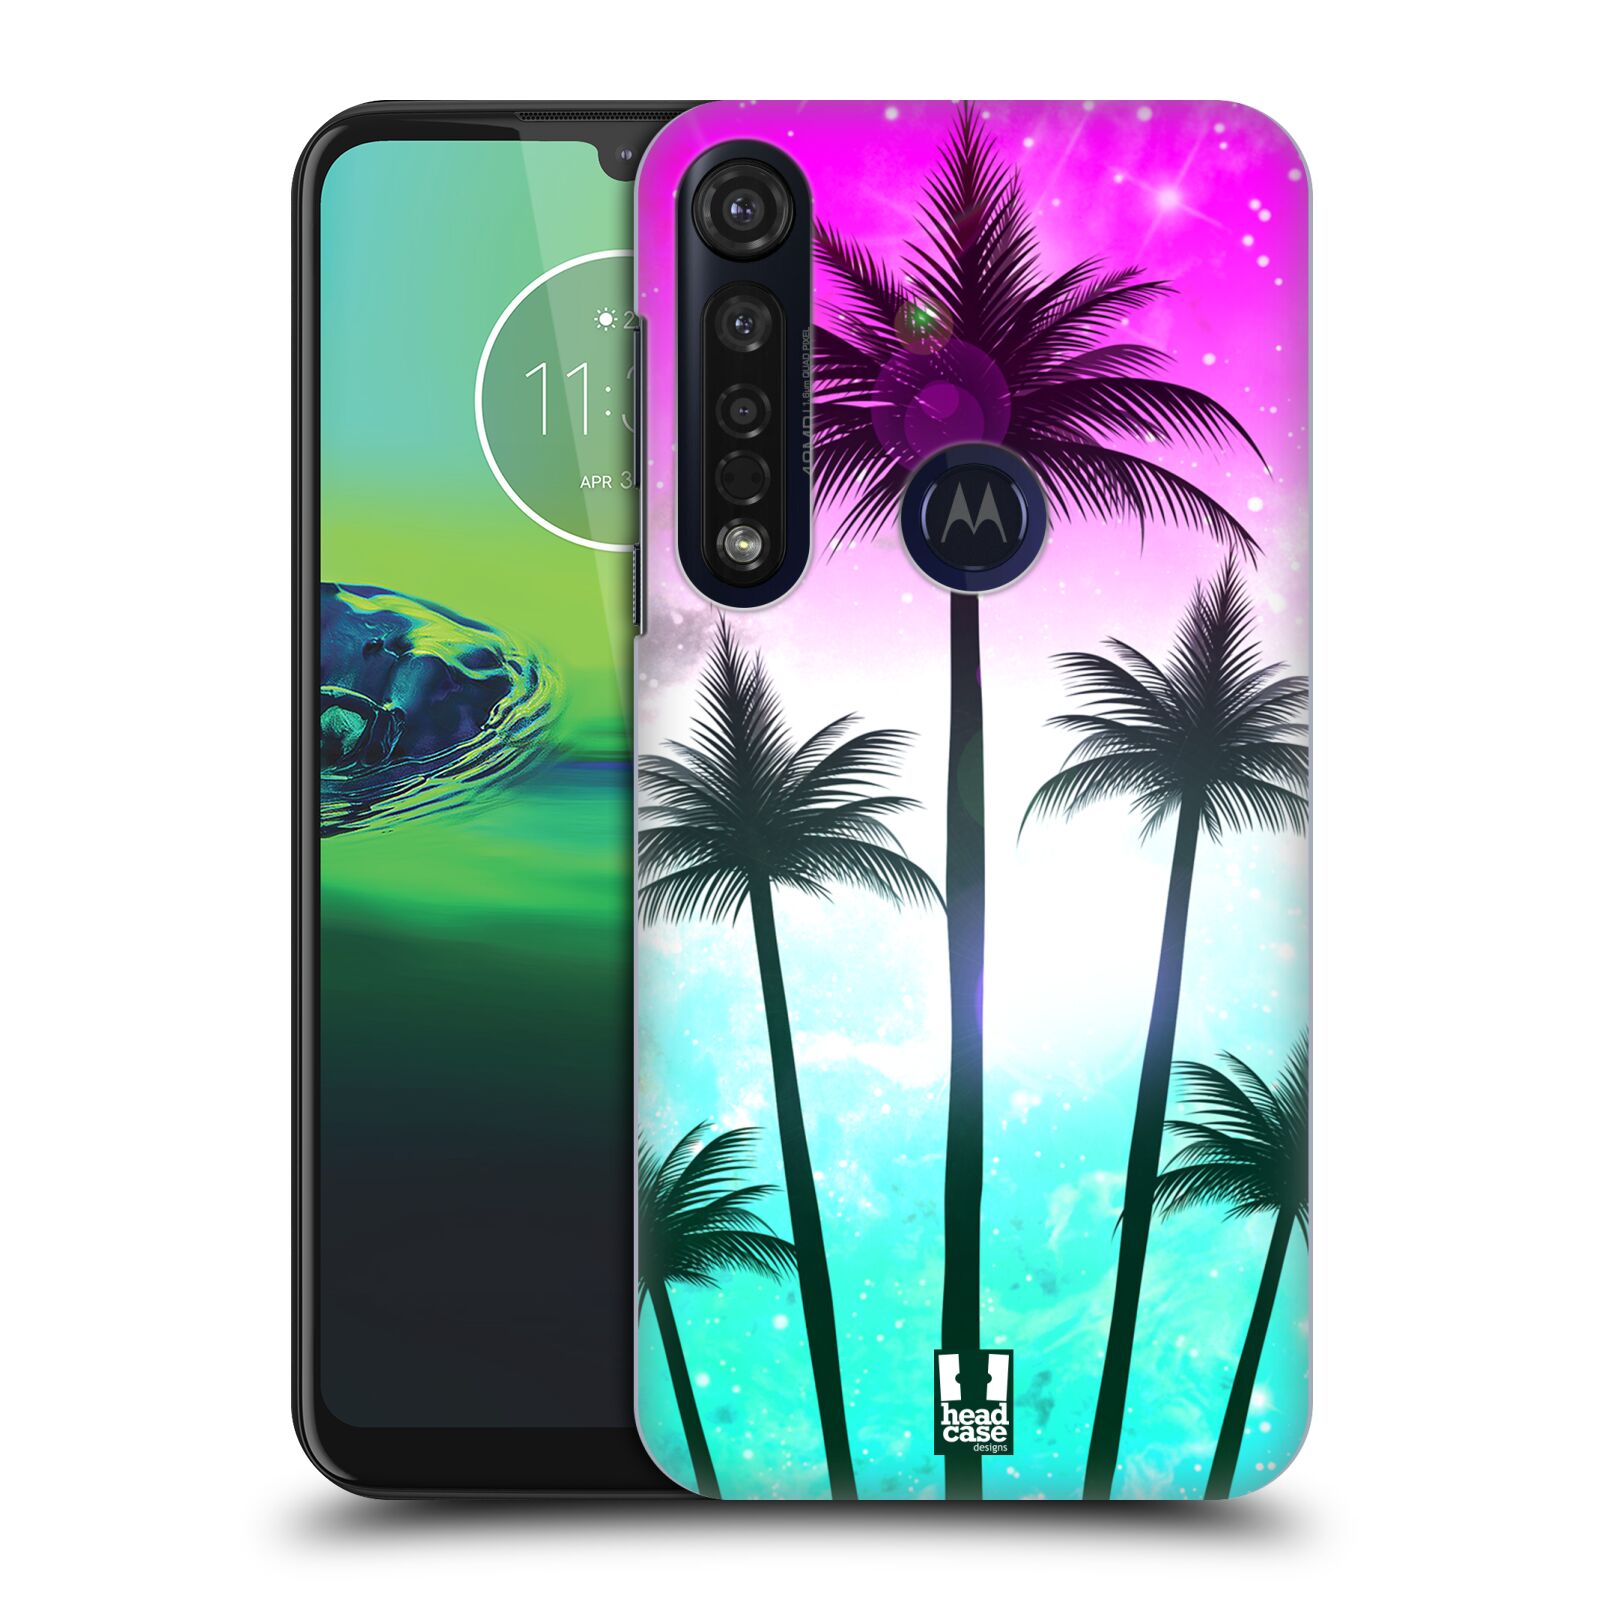 Pouzdro na mobil Motorola Moto G8 PLUS - HEAD CASE - vzor Kreslený motiv silueta moře a palmy RŮŽOVÁ A TYRKYS